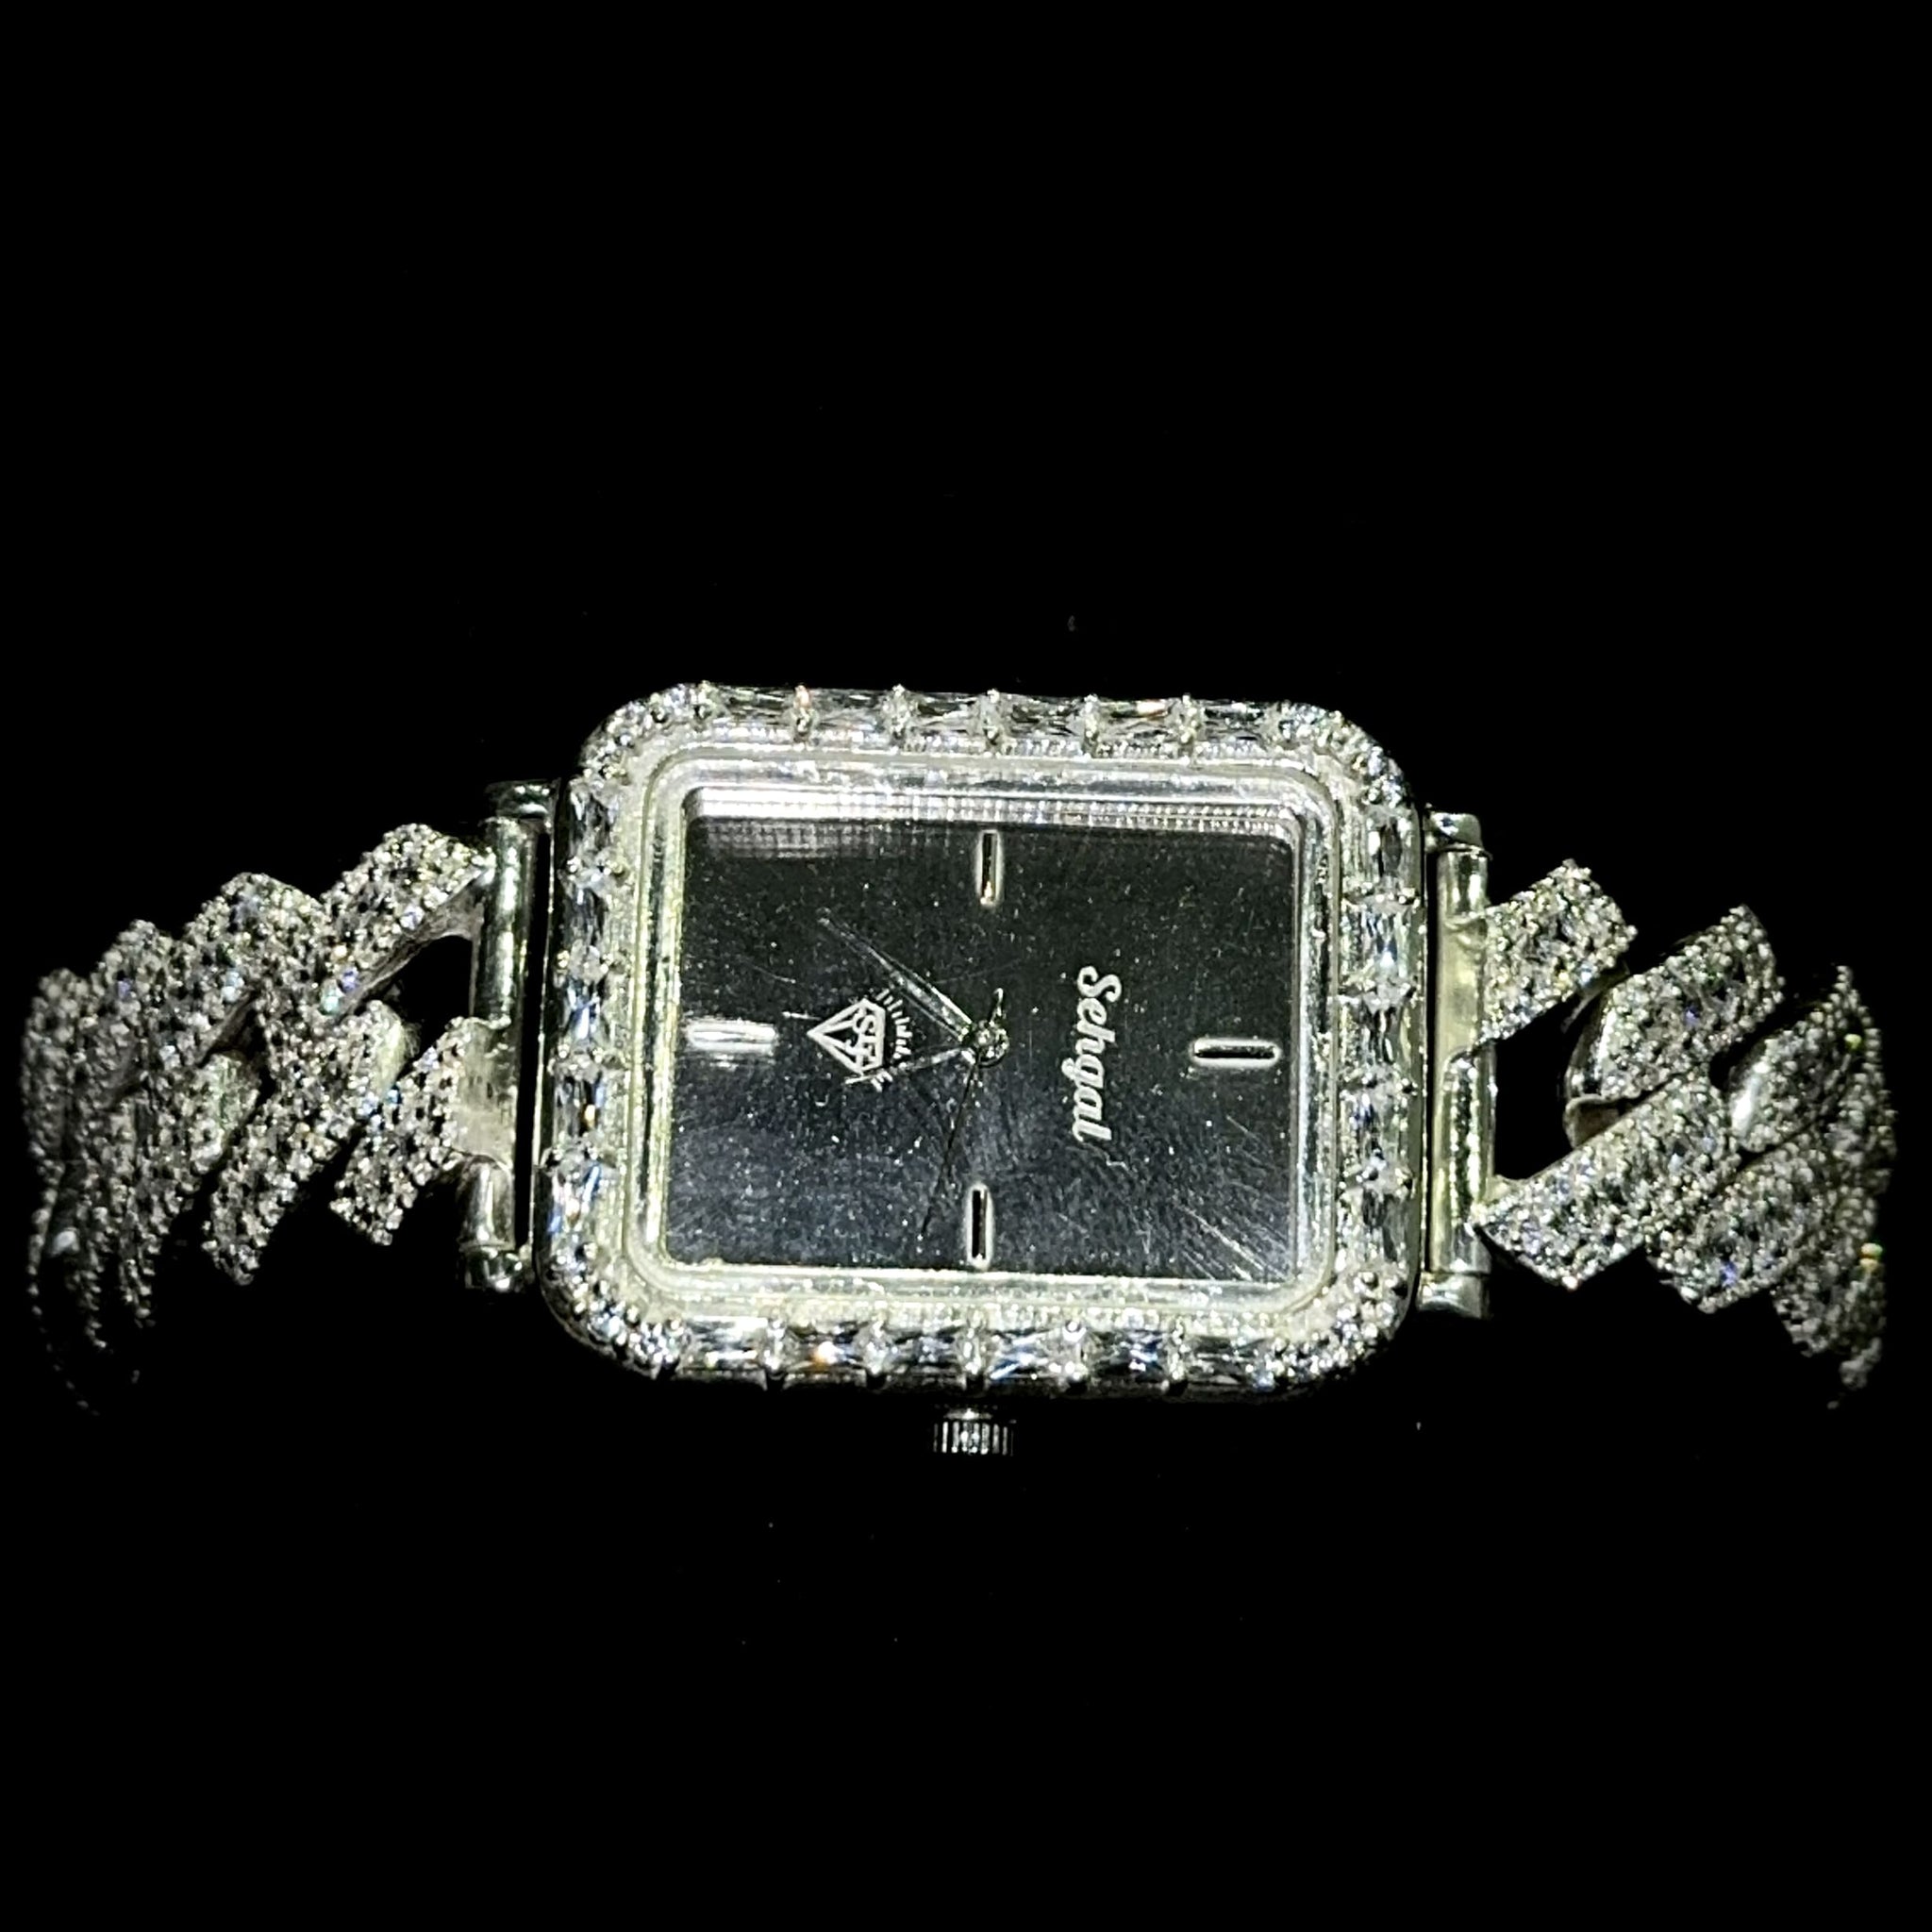 Sehgal Opulent Watch - Silver 925 - Cuban Link